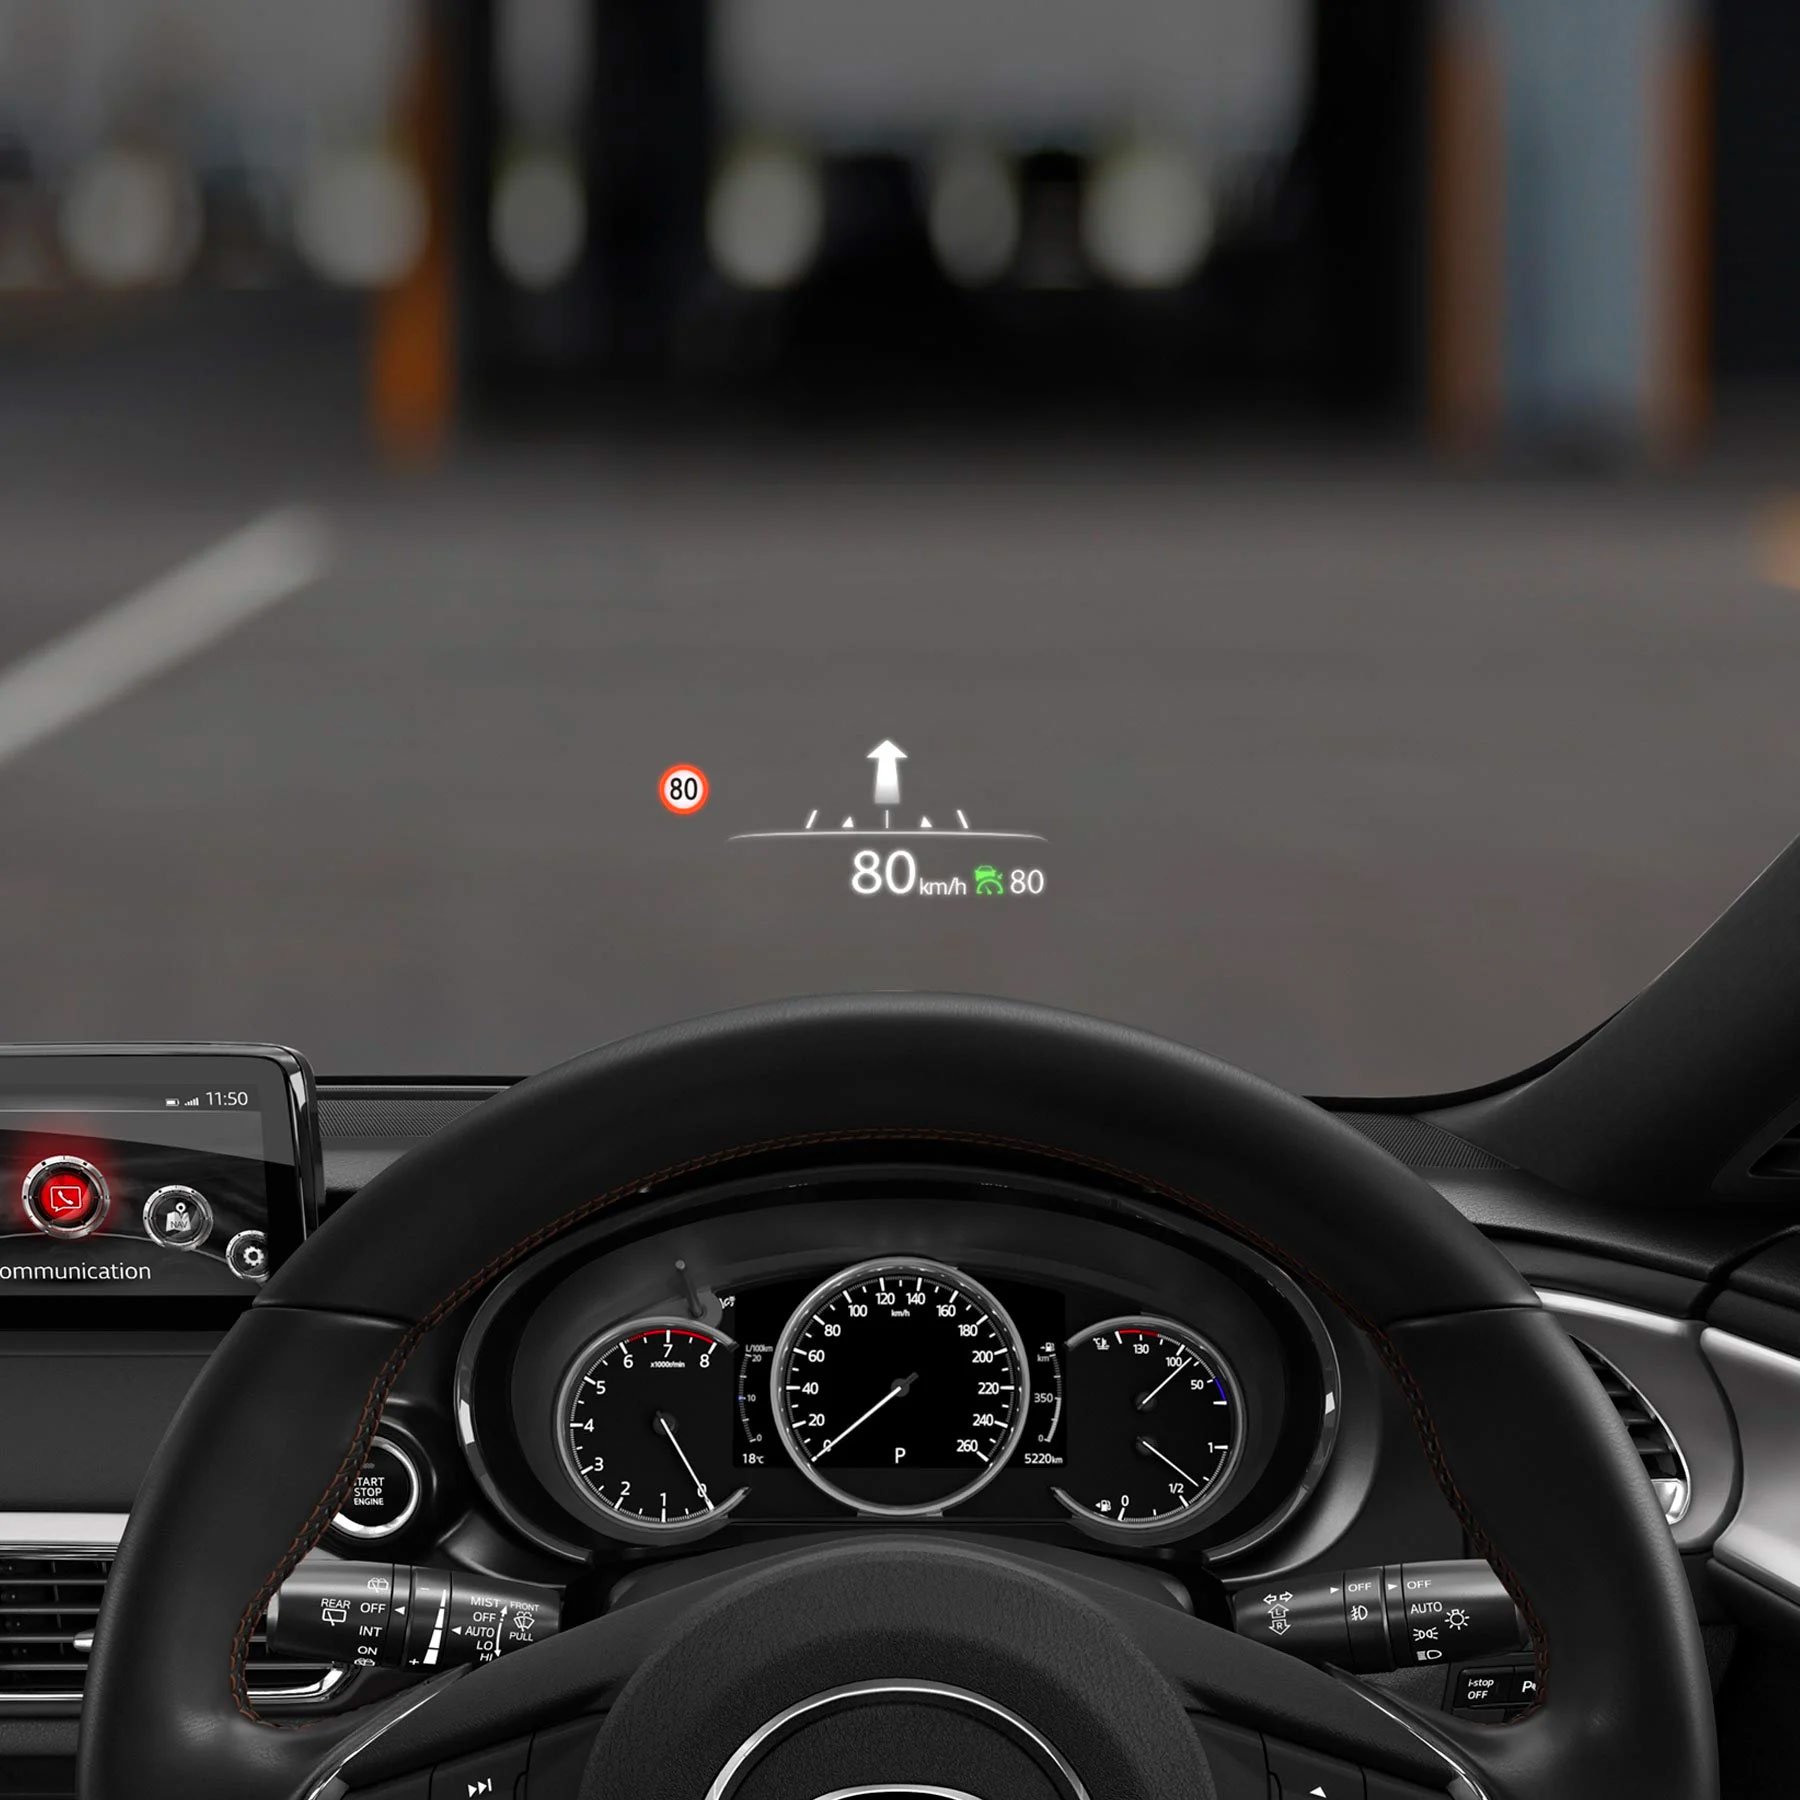 Active Driving Display & Multi-Information Meter Display